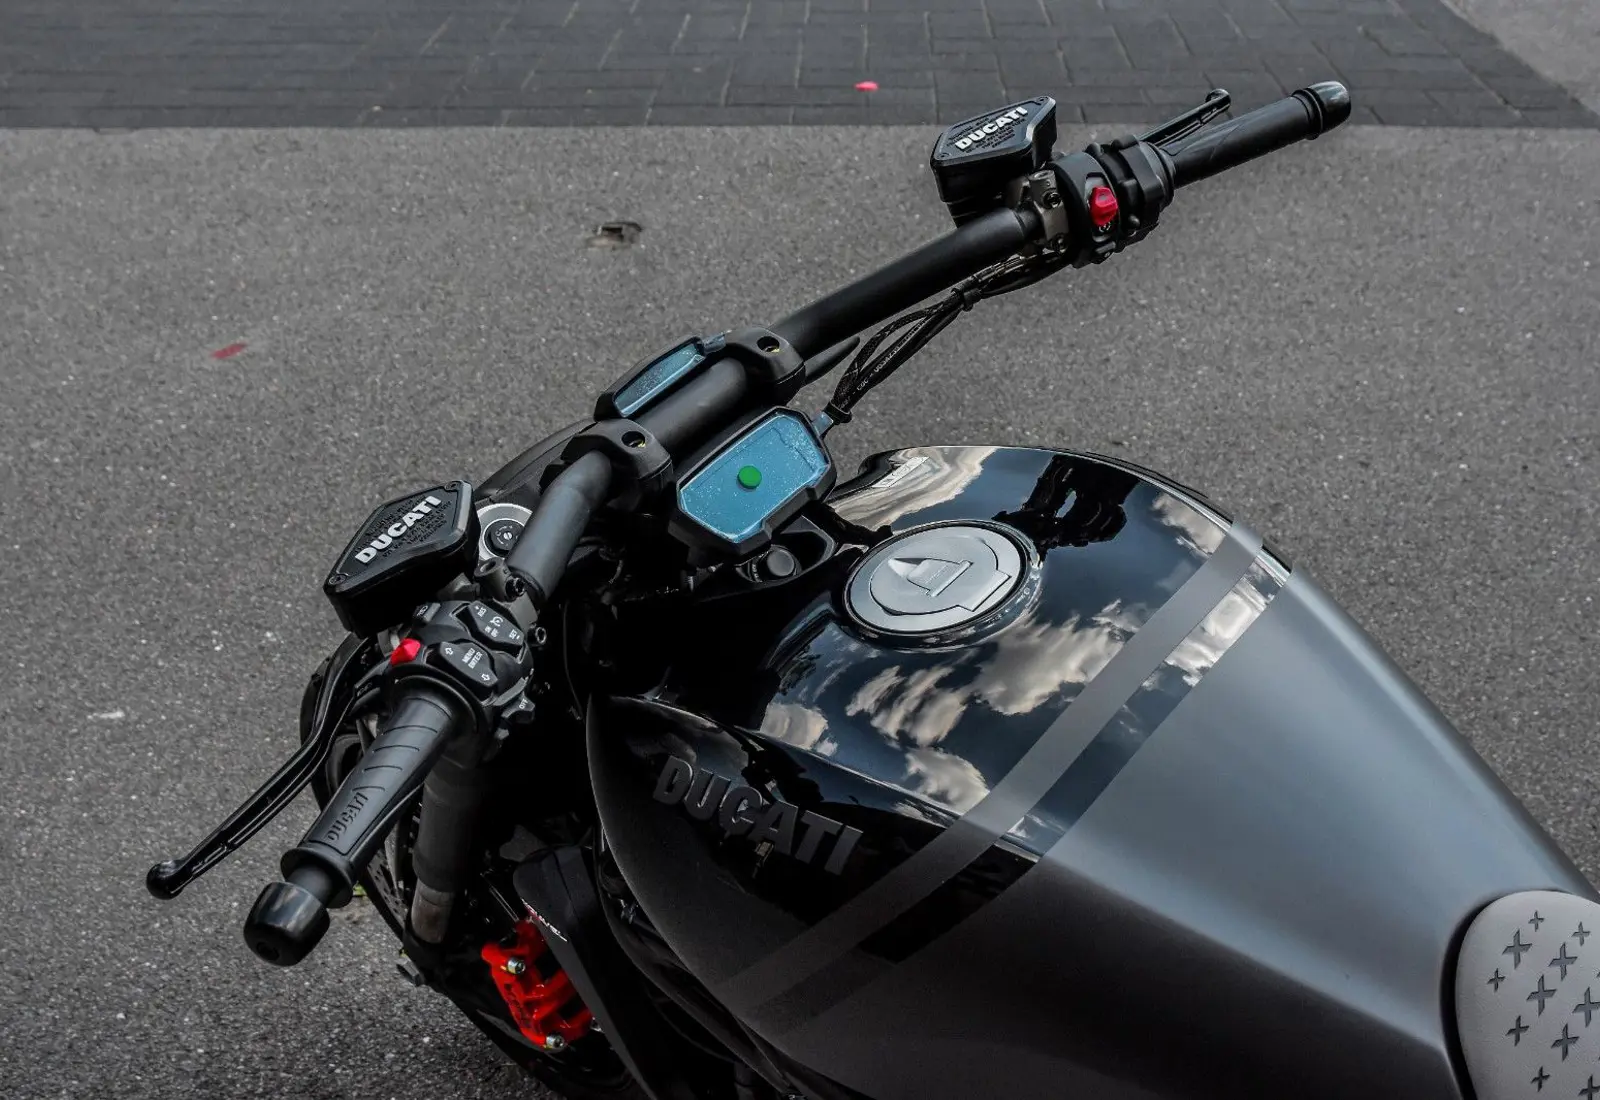 Ducati X-Diavel Nera * POLTRONA FRAU * 1 OF 500 * LIMITED ED - 44497